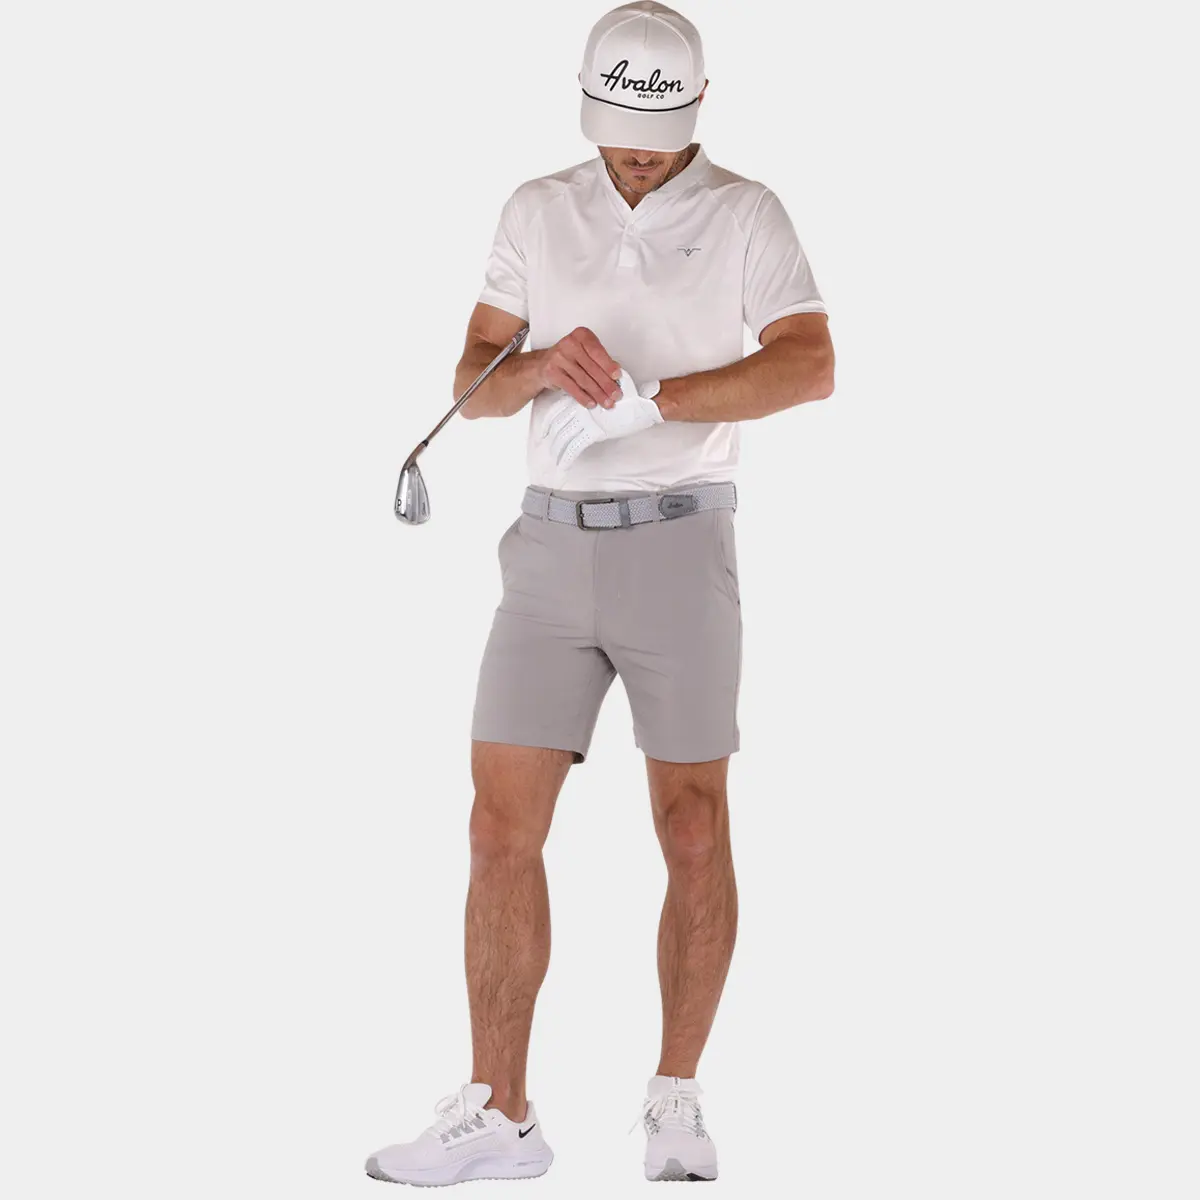 pro tour golf shorts 7 inch inseam